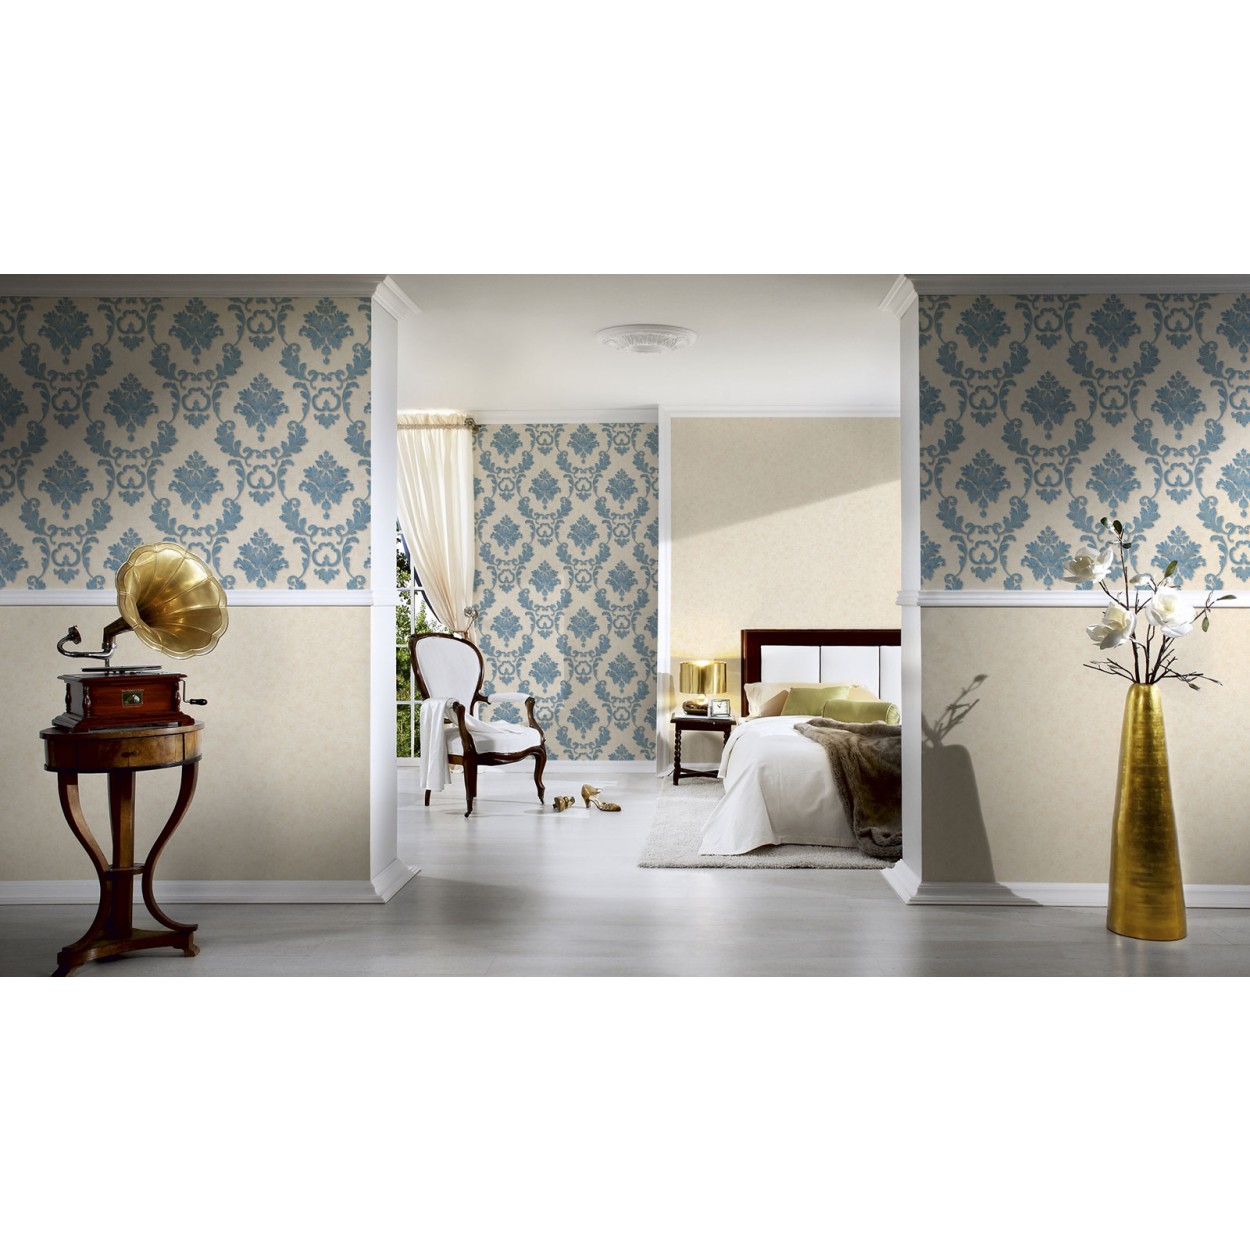 luxury wallpaper,white,floor,yellow,room,furniture